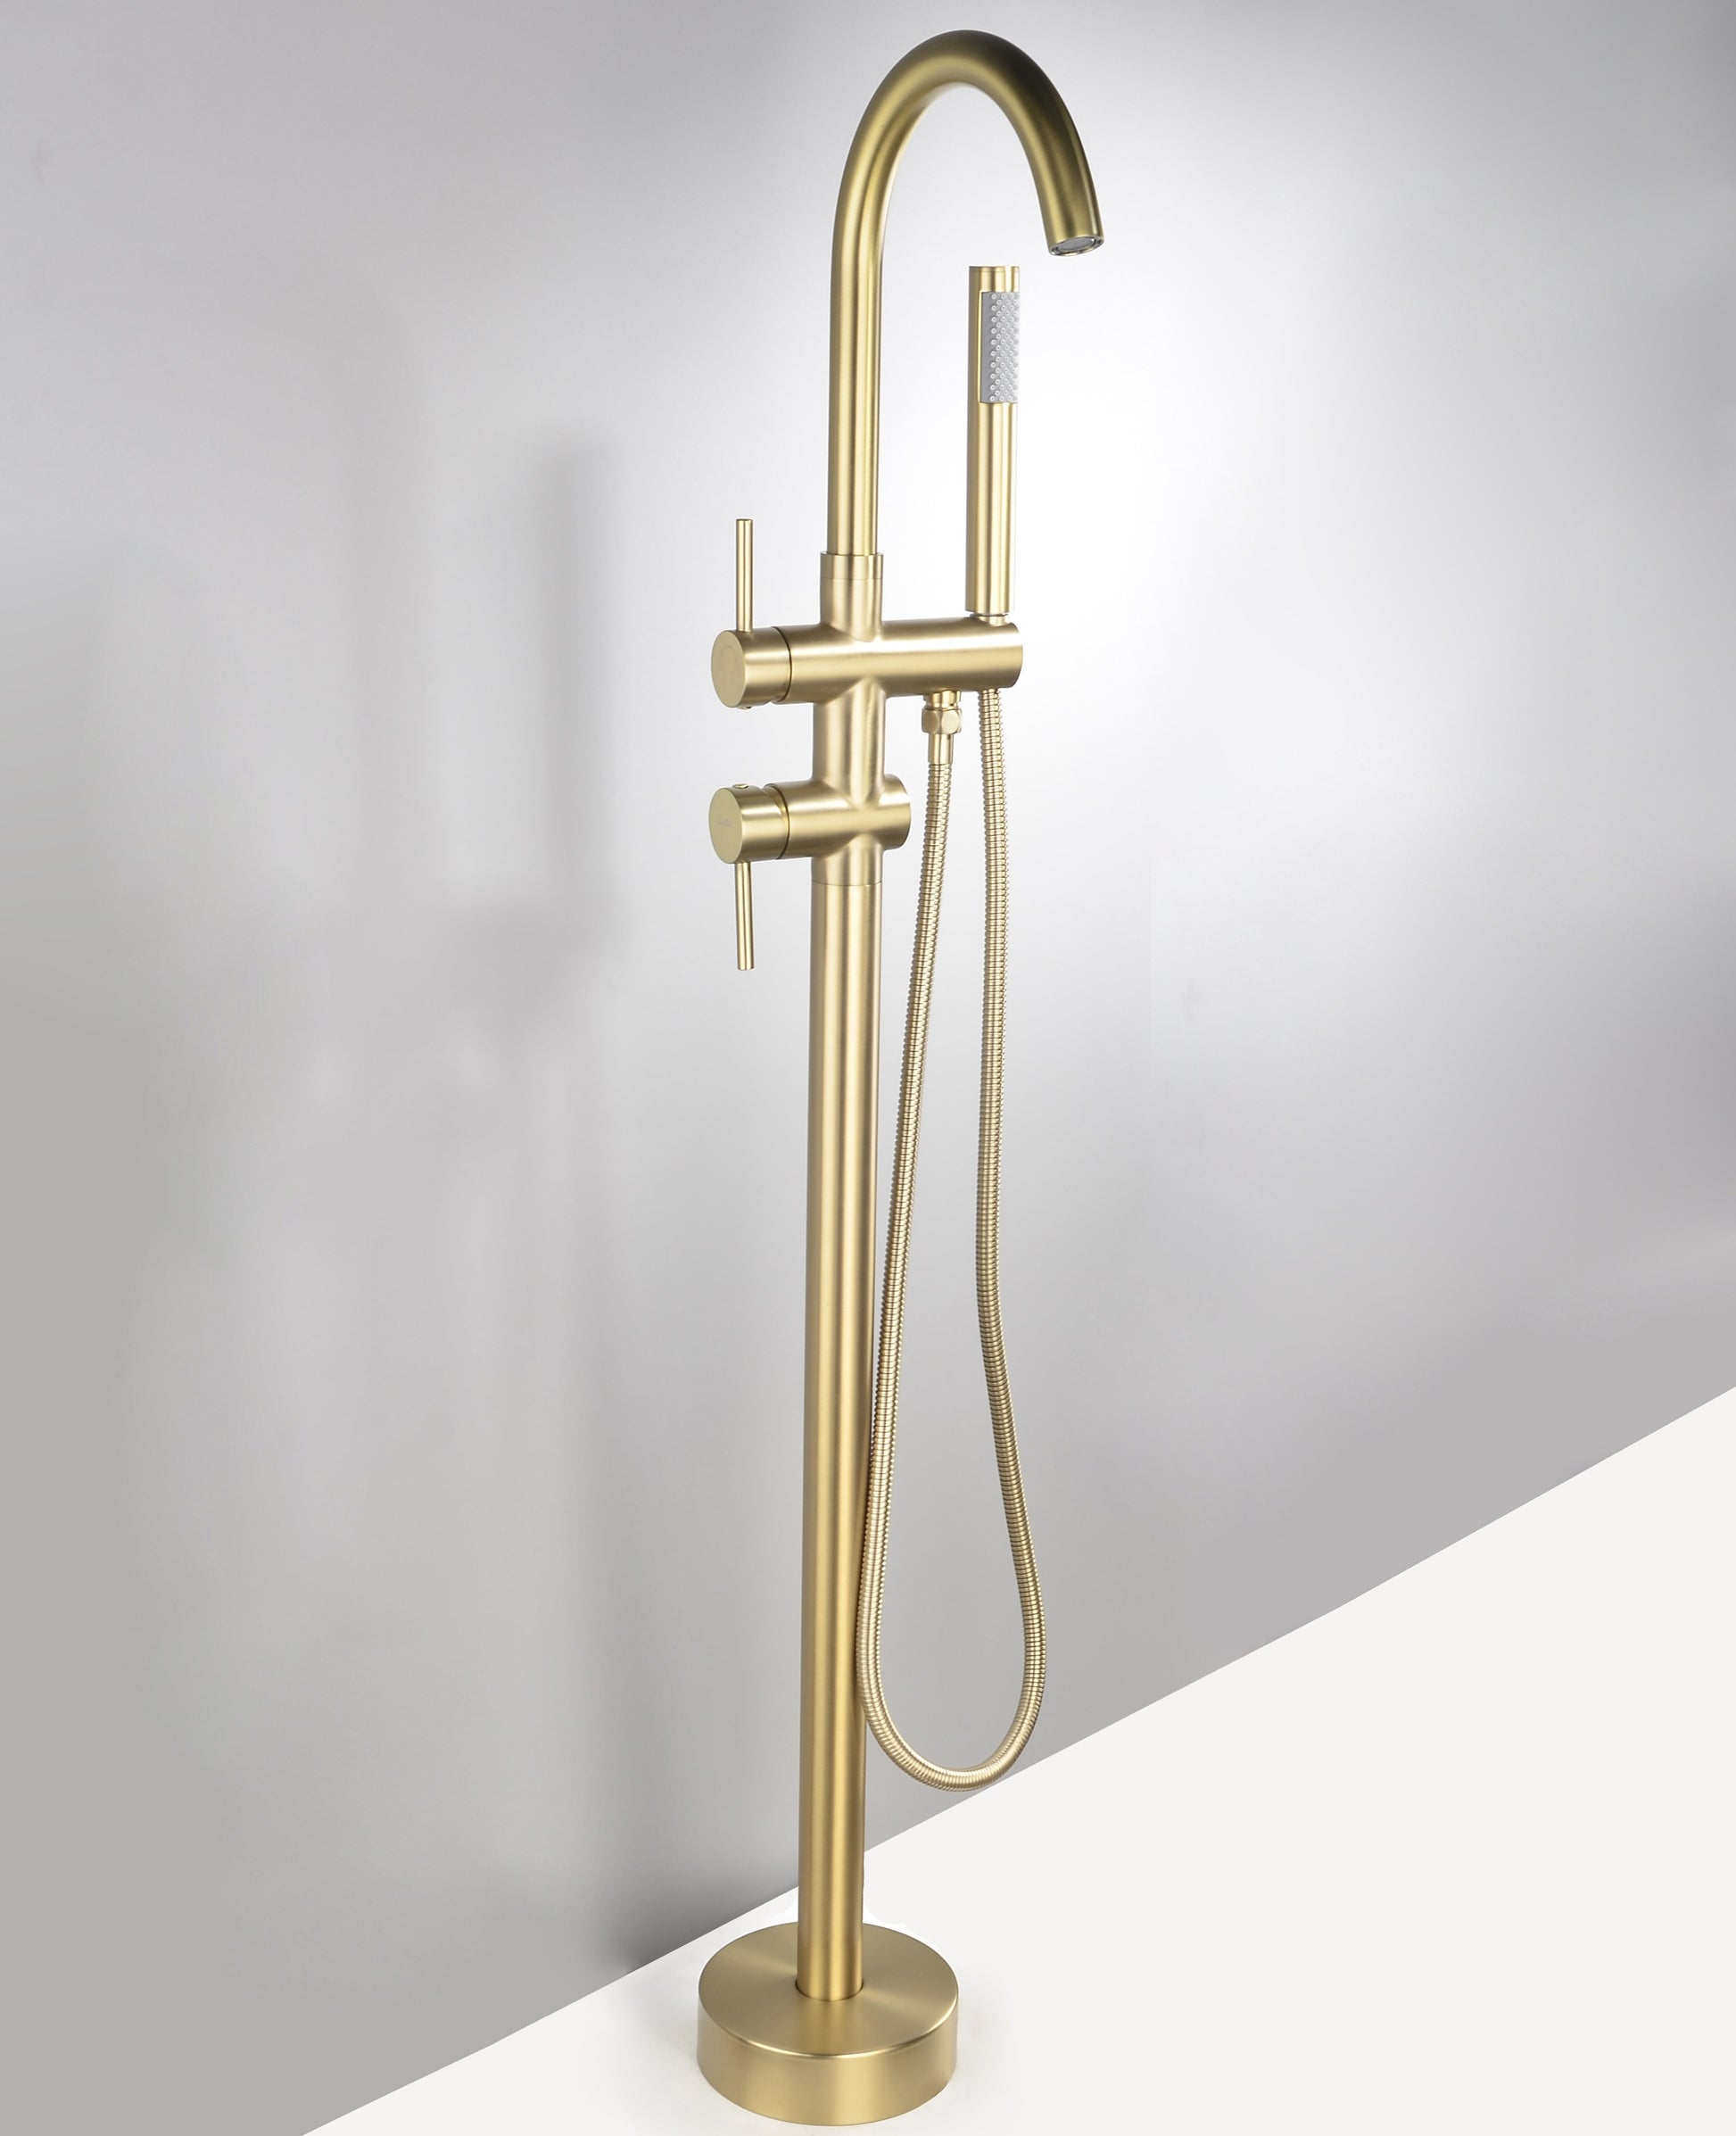 Freestanding Floor Mount 2-Handle Bath Tub Filler Faucet with Handheld Shower in Brushed Gold - Alipuinc